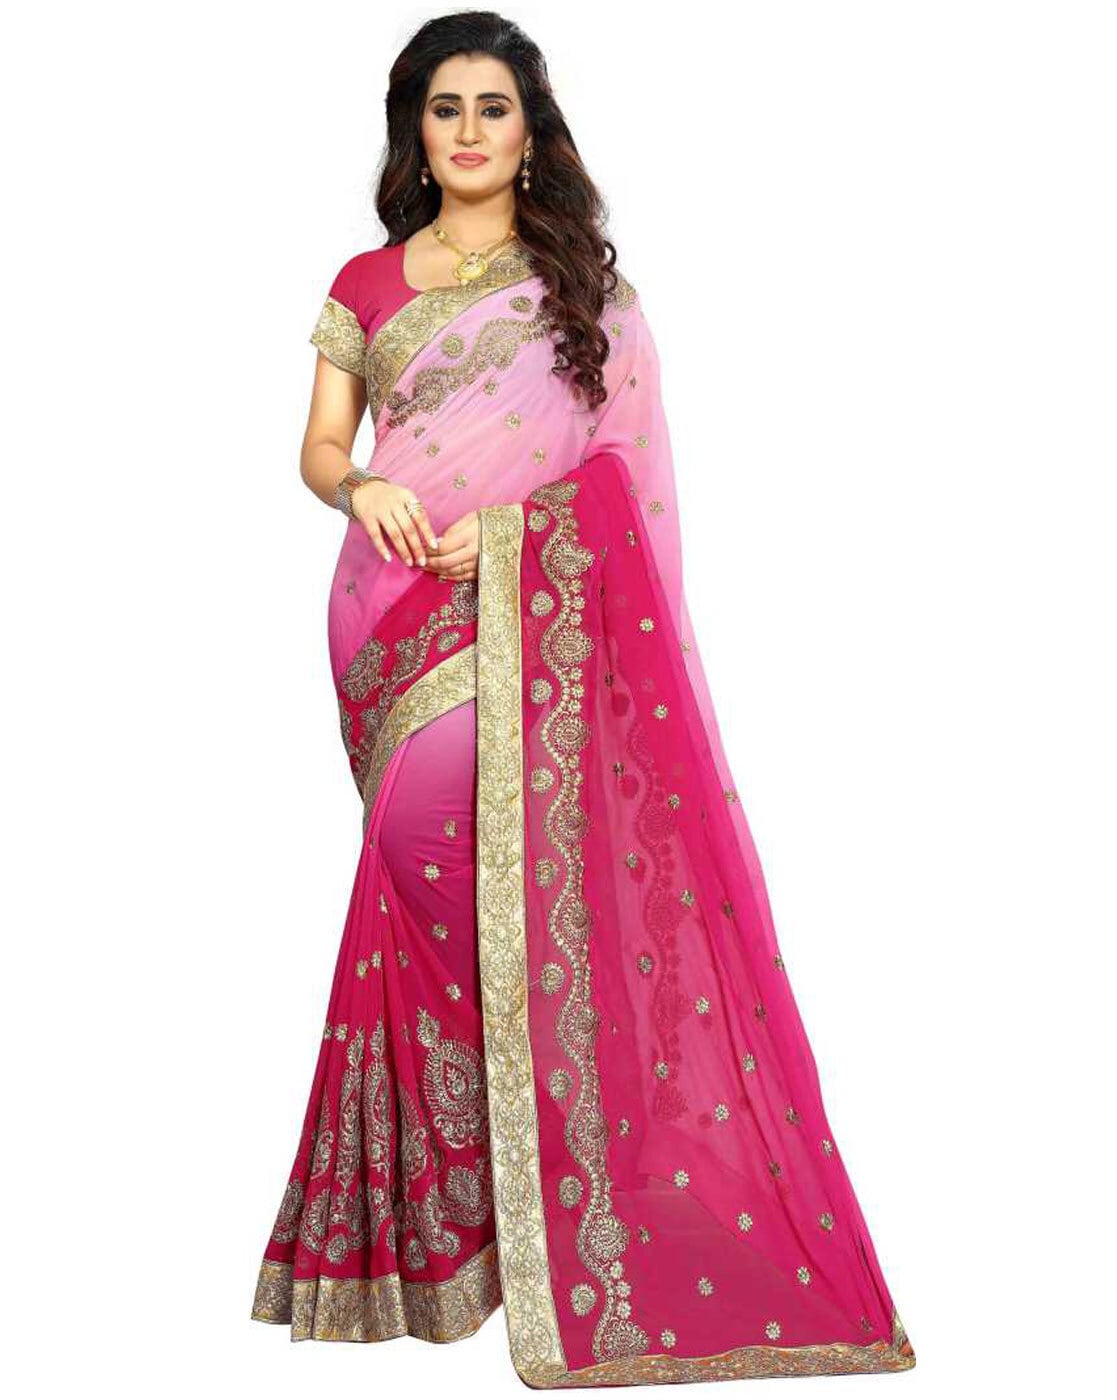 India Design, Choli, Lehenga, Sari, Lehengastyle Saree, Silk, Clothing,  Dress transparent background PNG clipart | HiClipart